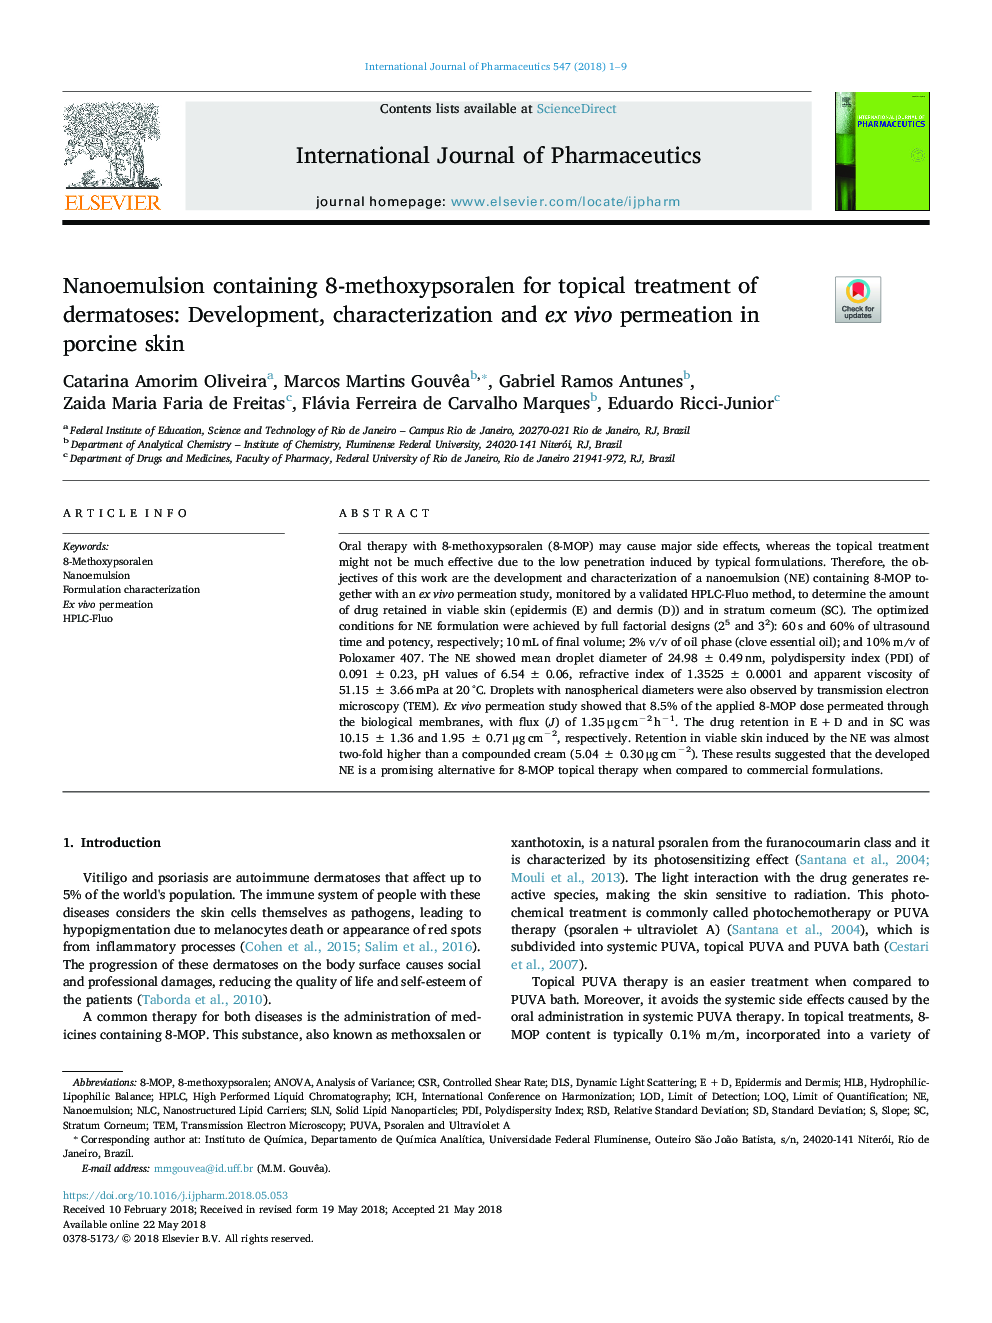 Nanoemulsion containing 8-methoxypsoralen for topical treatment of dermatoses: Development, characterization and ex vivo permeation in porcine skin